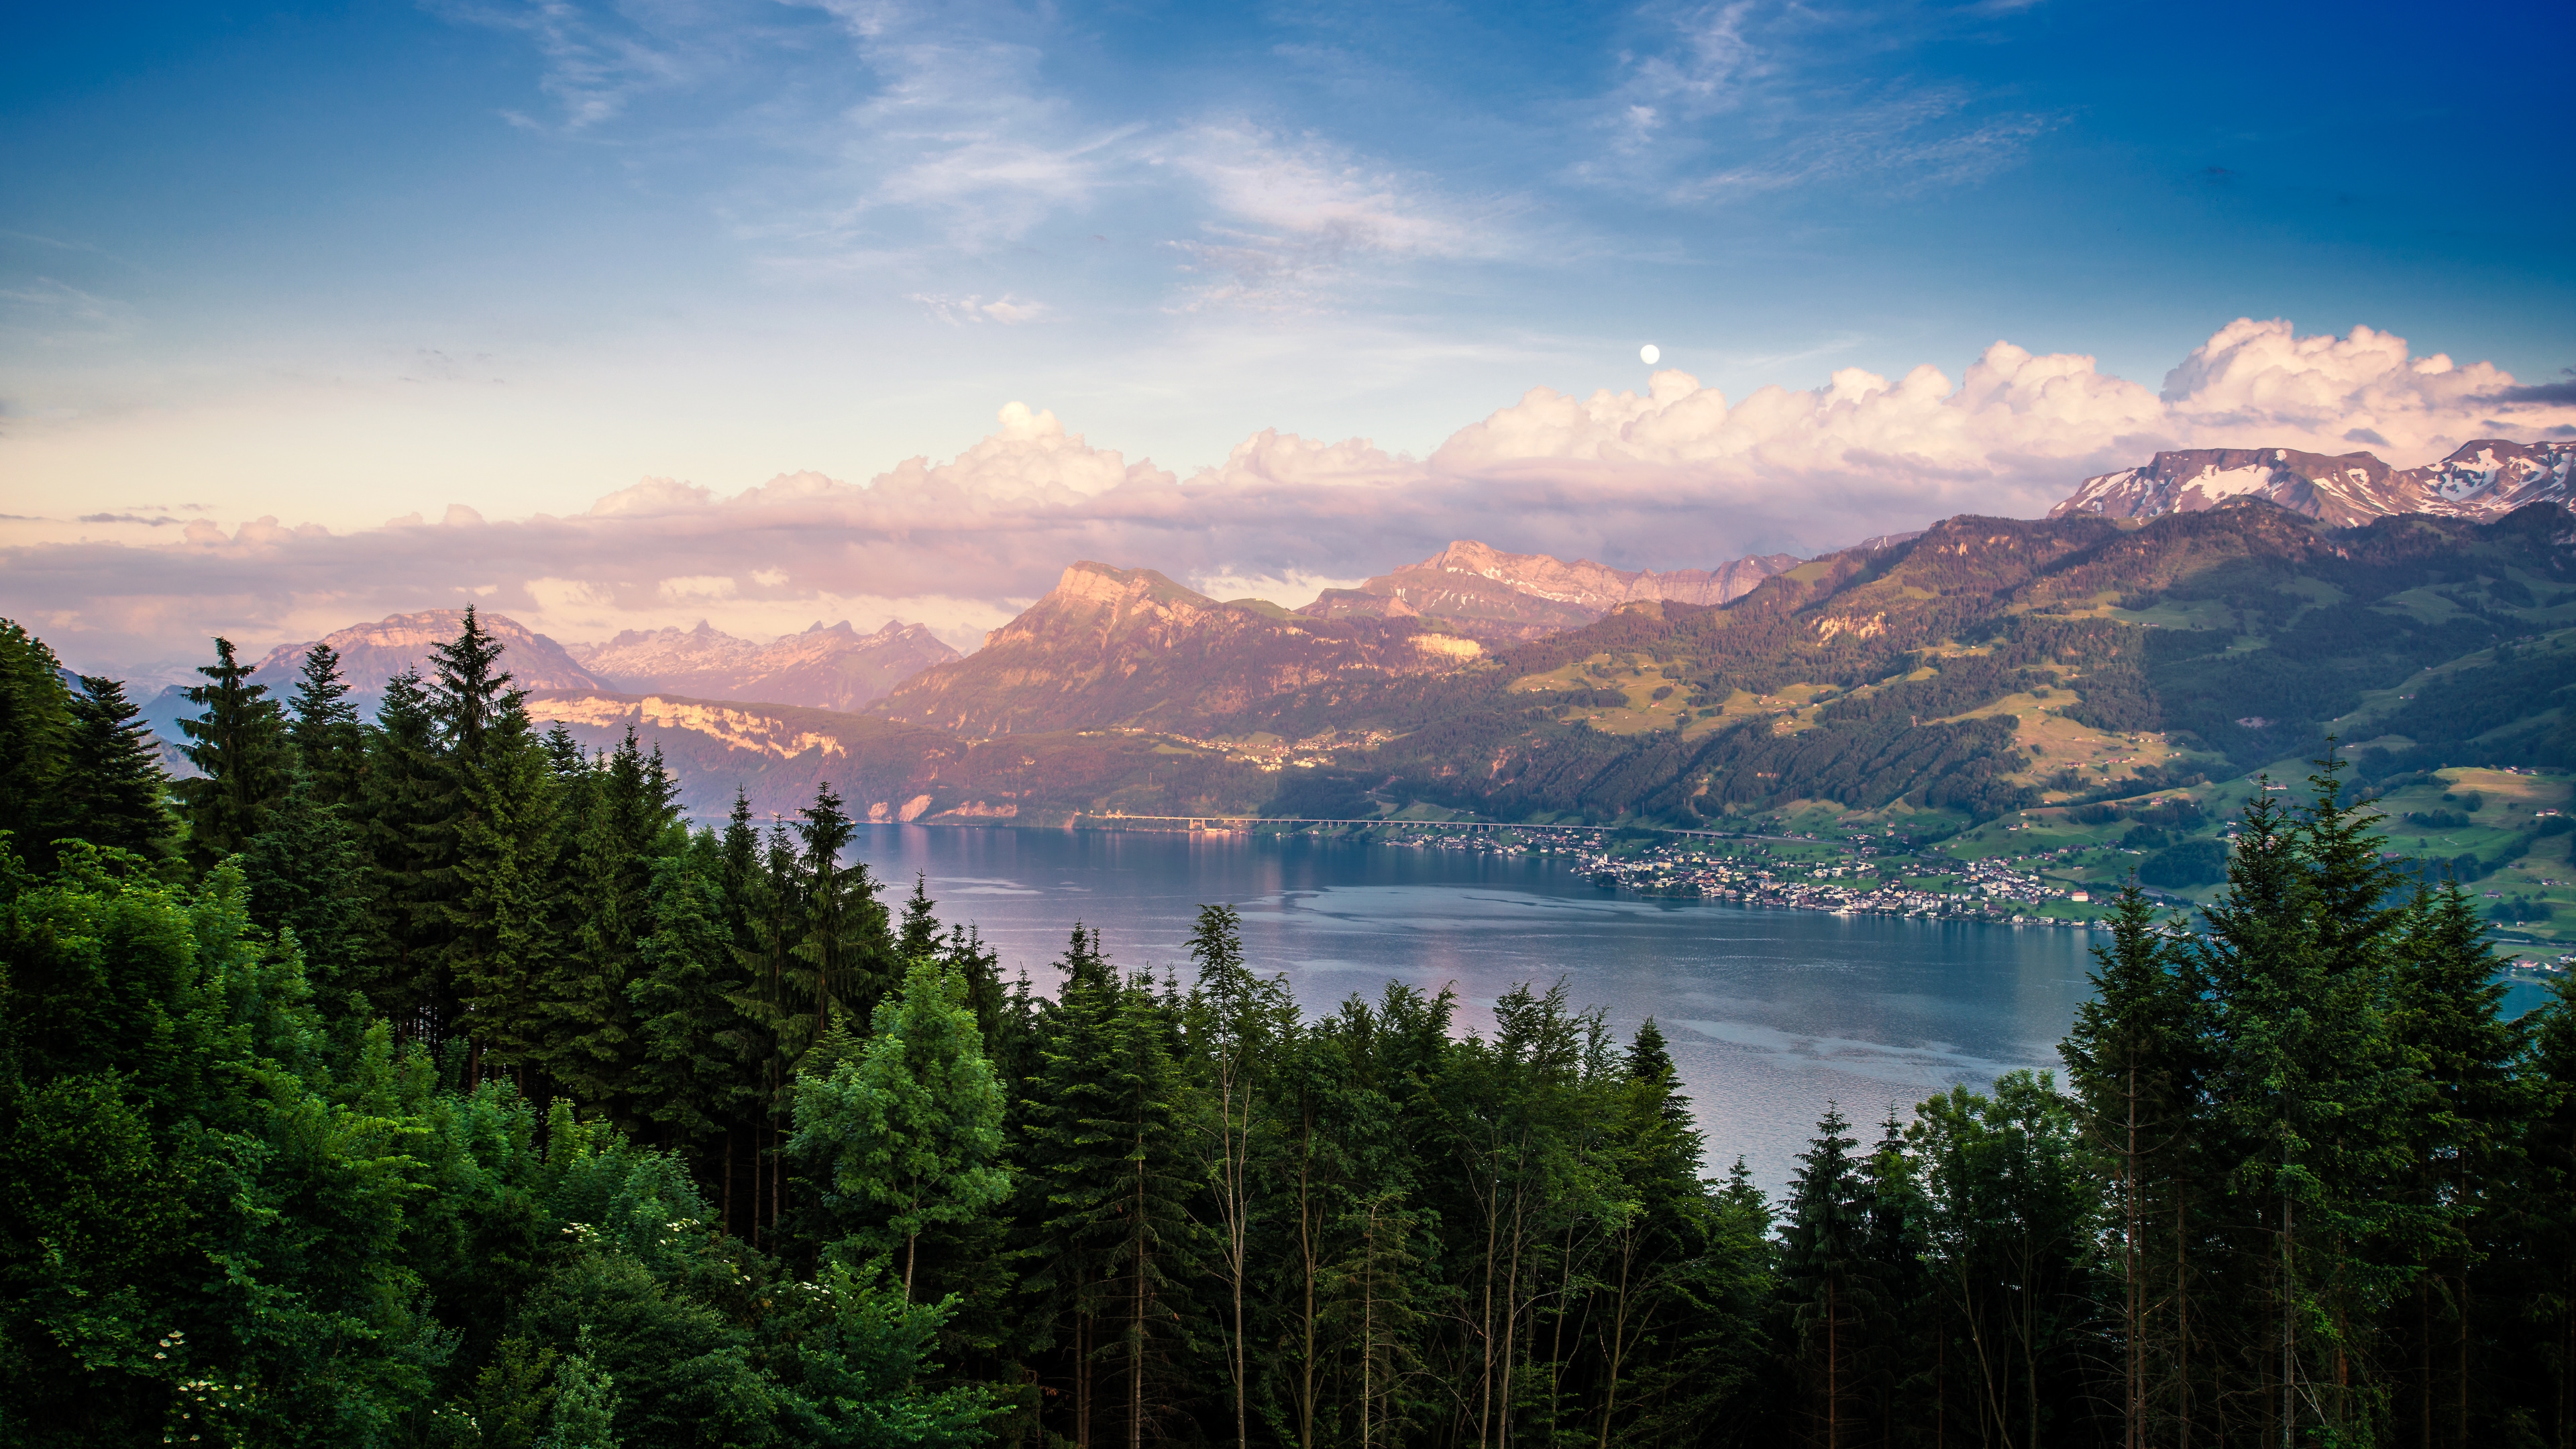 Lake Zurich Landscape for 3840 x 2160 Ultra HD resolution